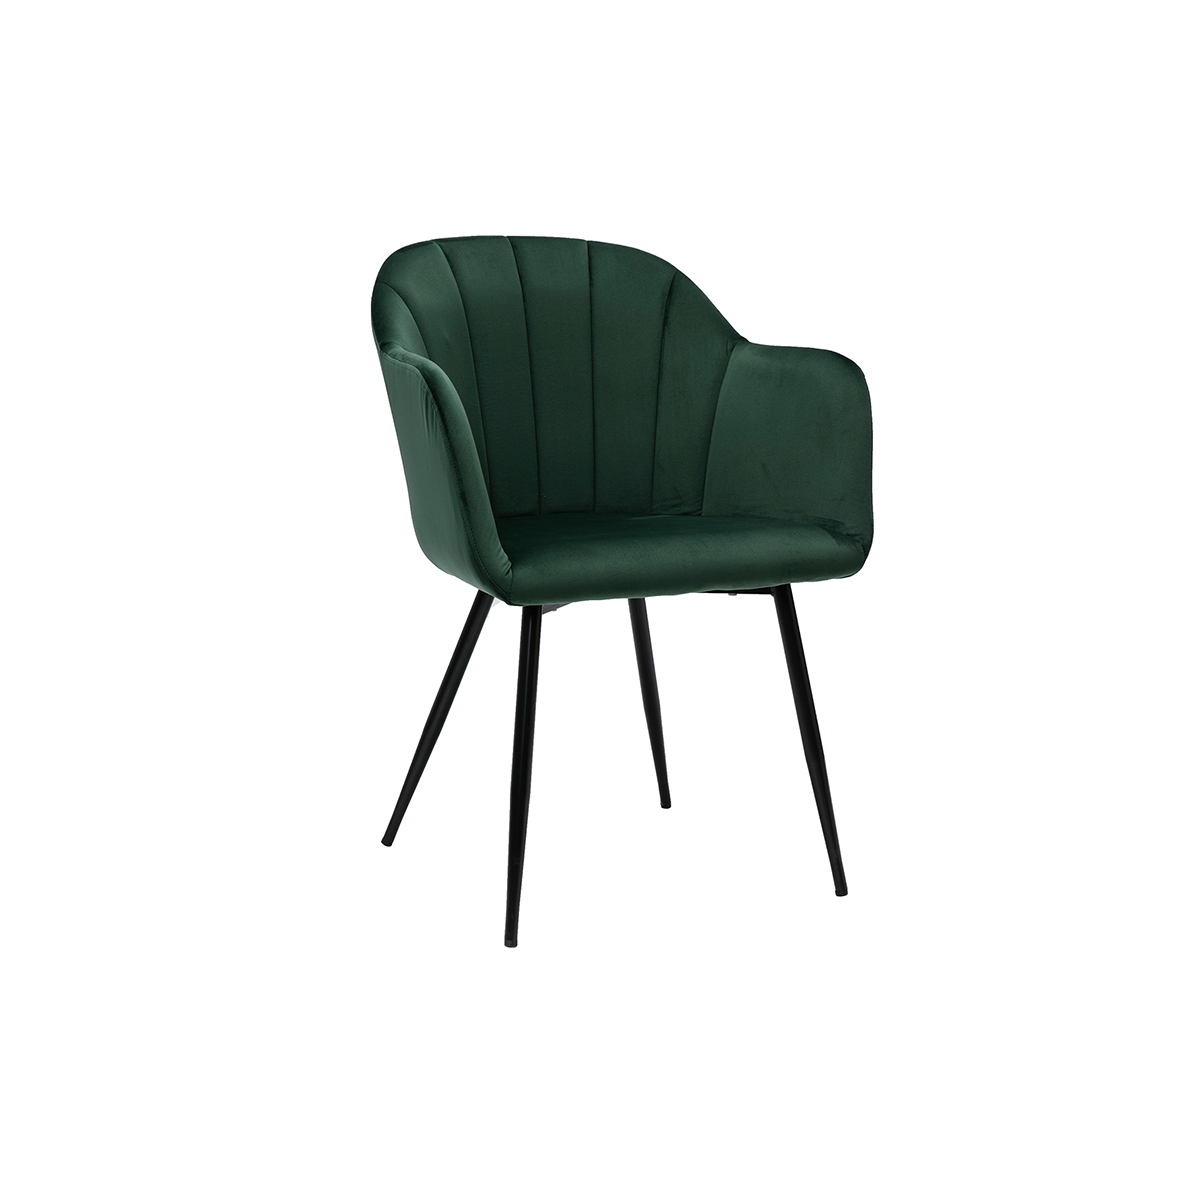 Chaise design en velours vert et pieds métal noir MILLY vue1